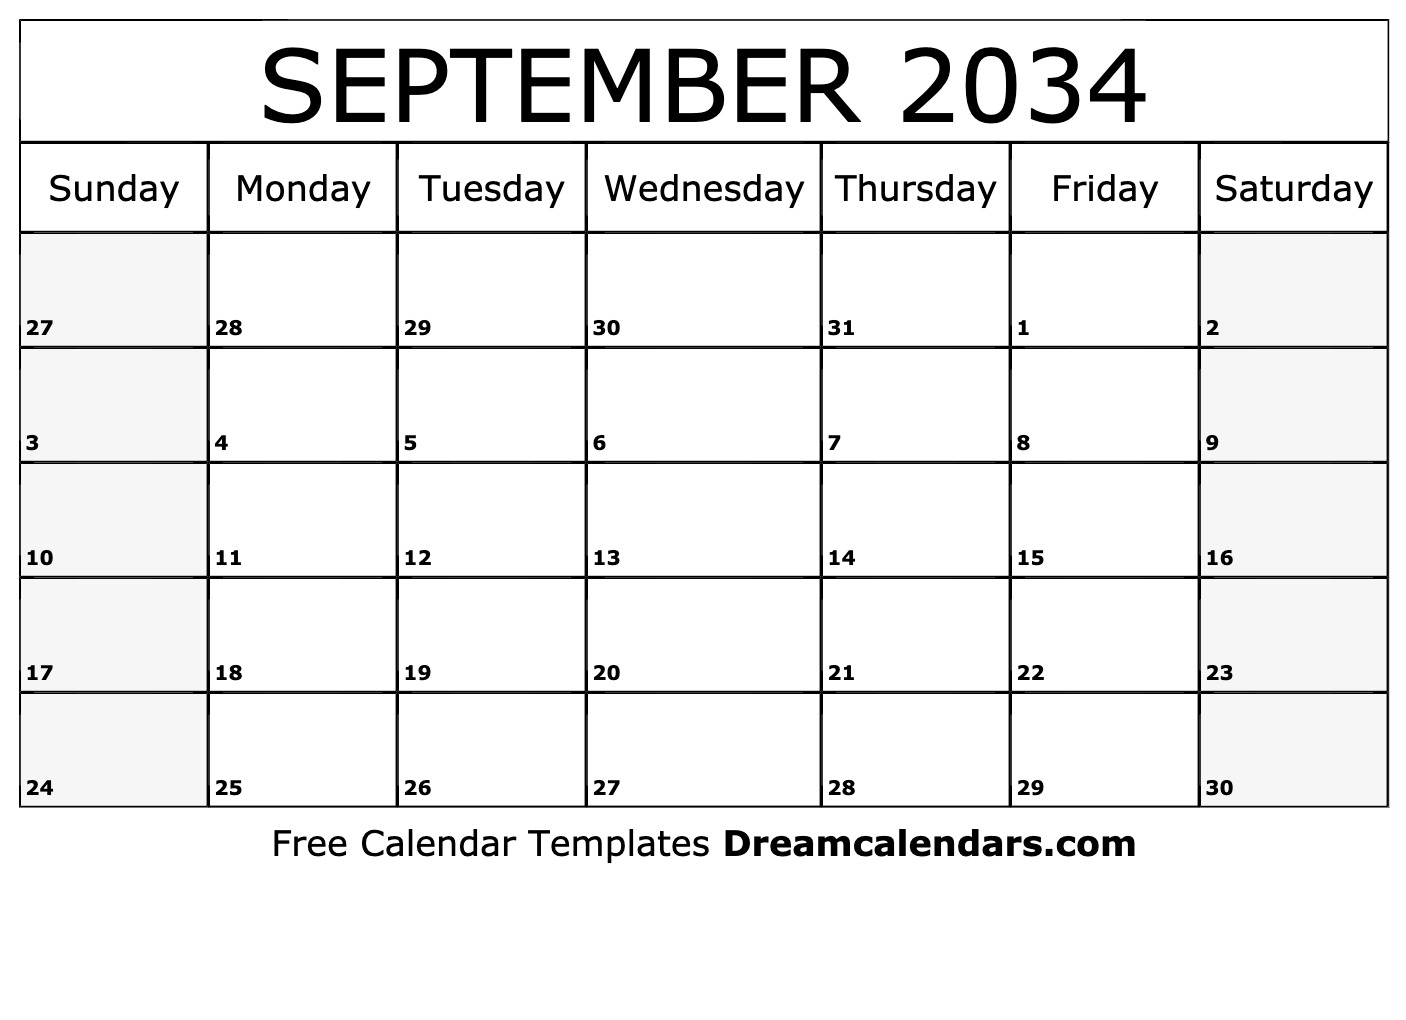 Январь 2023 недели. Календарь. Календарь на сентябрь 2023 года. Календарь декабрь 2023. Календарь на ноябрь 2023 года.